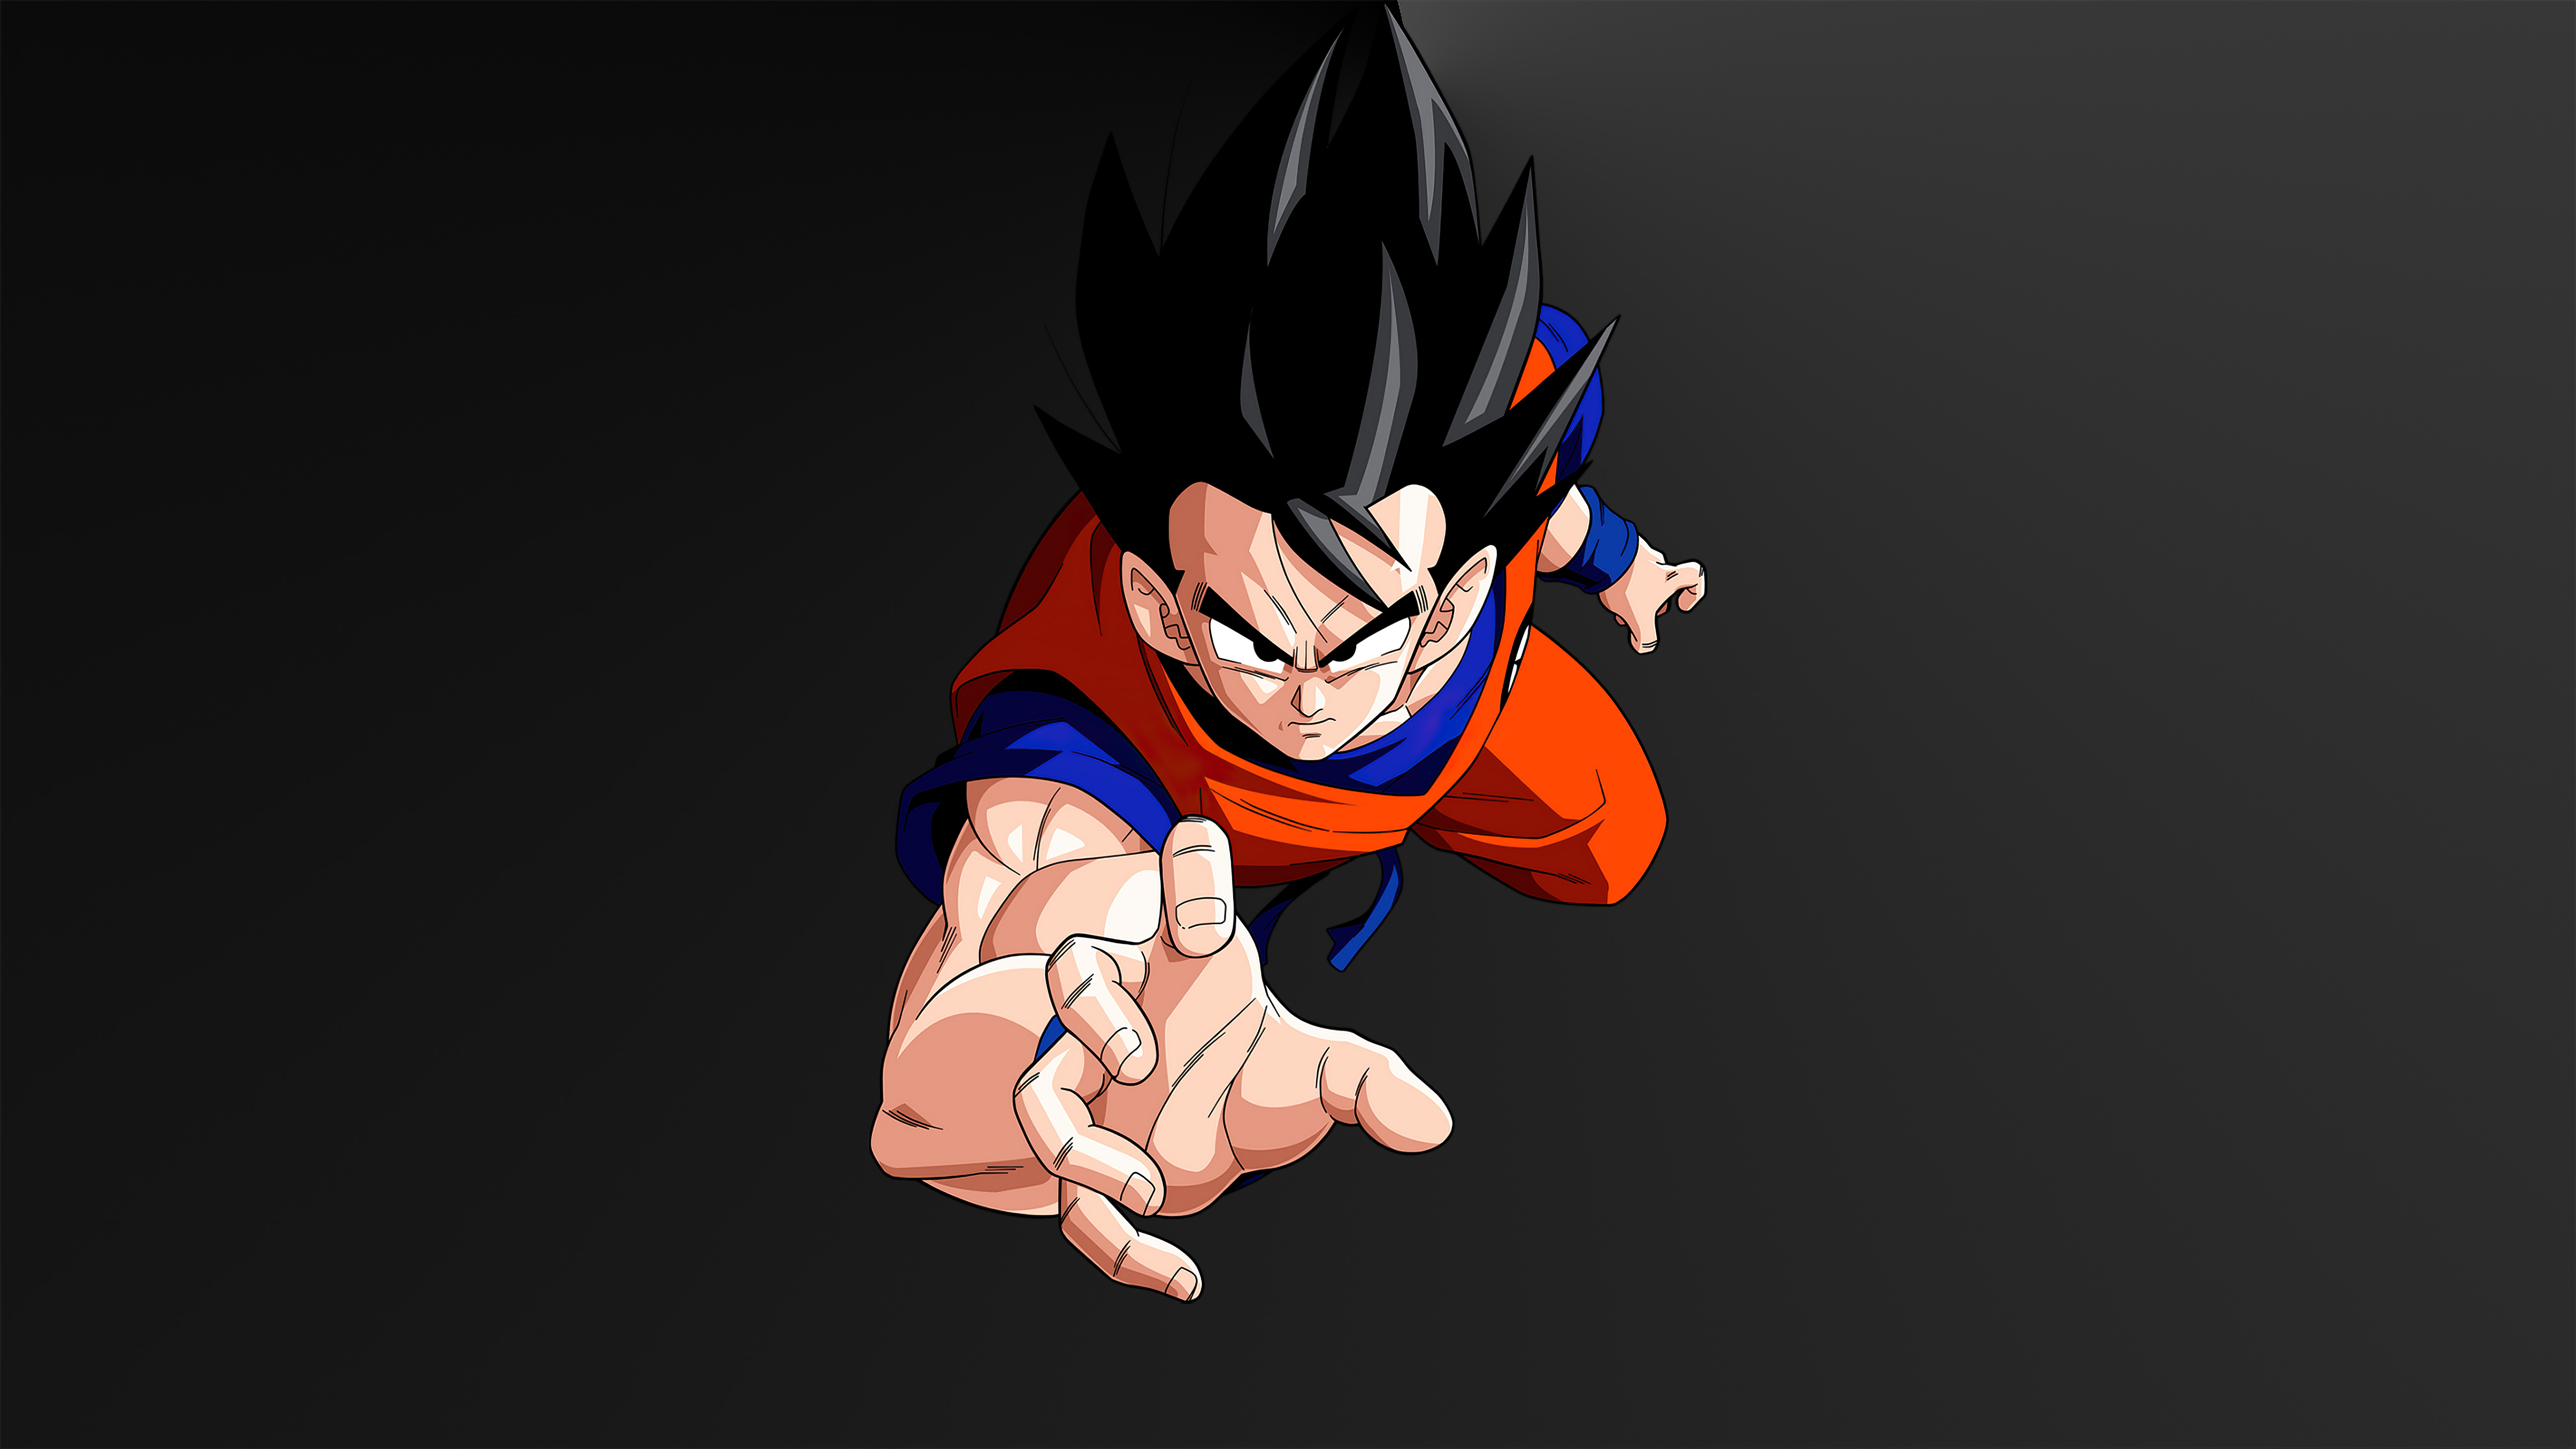 Goku Wallpaper 4K For Mobile : 85 ᐈ Goku Wallpapers: Top 4k Goku